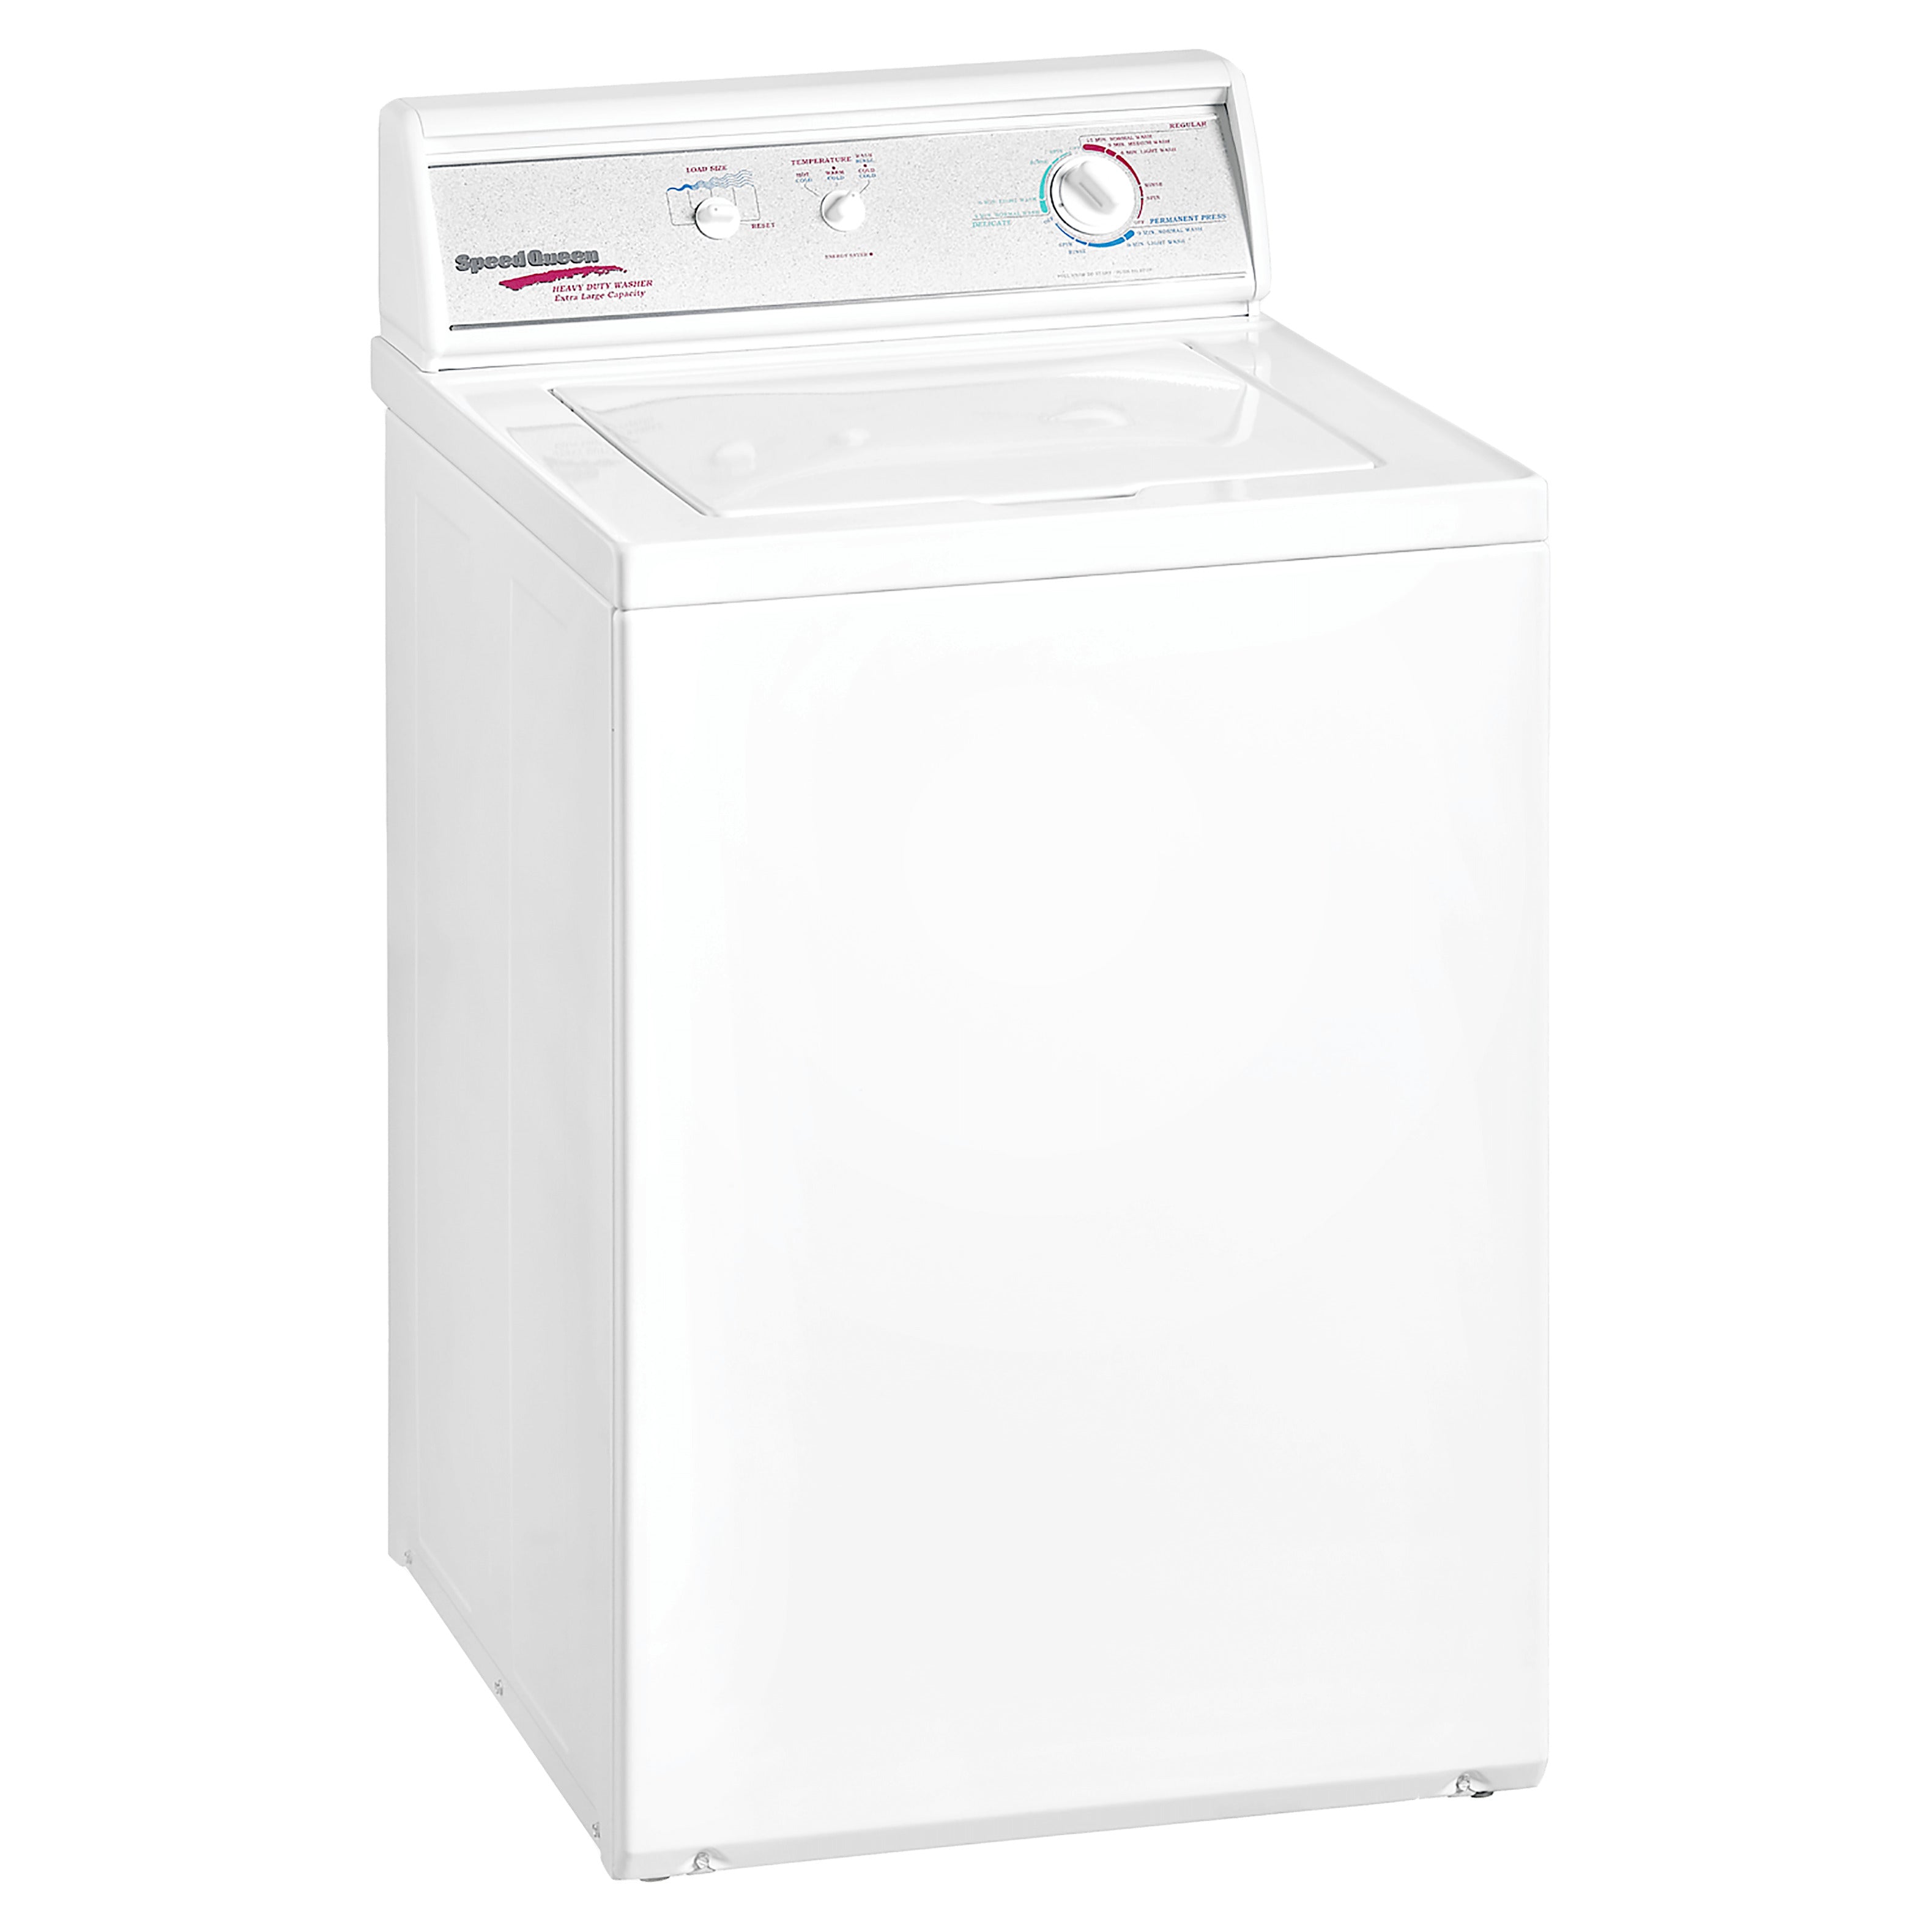 Speed Queen 10.5kg Top Loader Washing Machine White LWS21NW